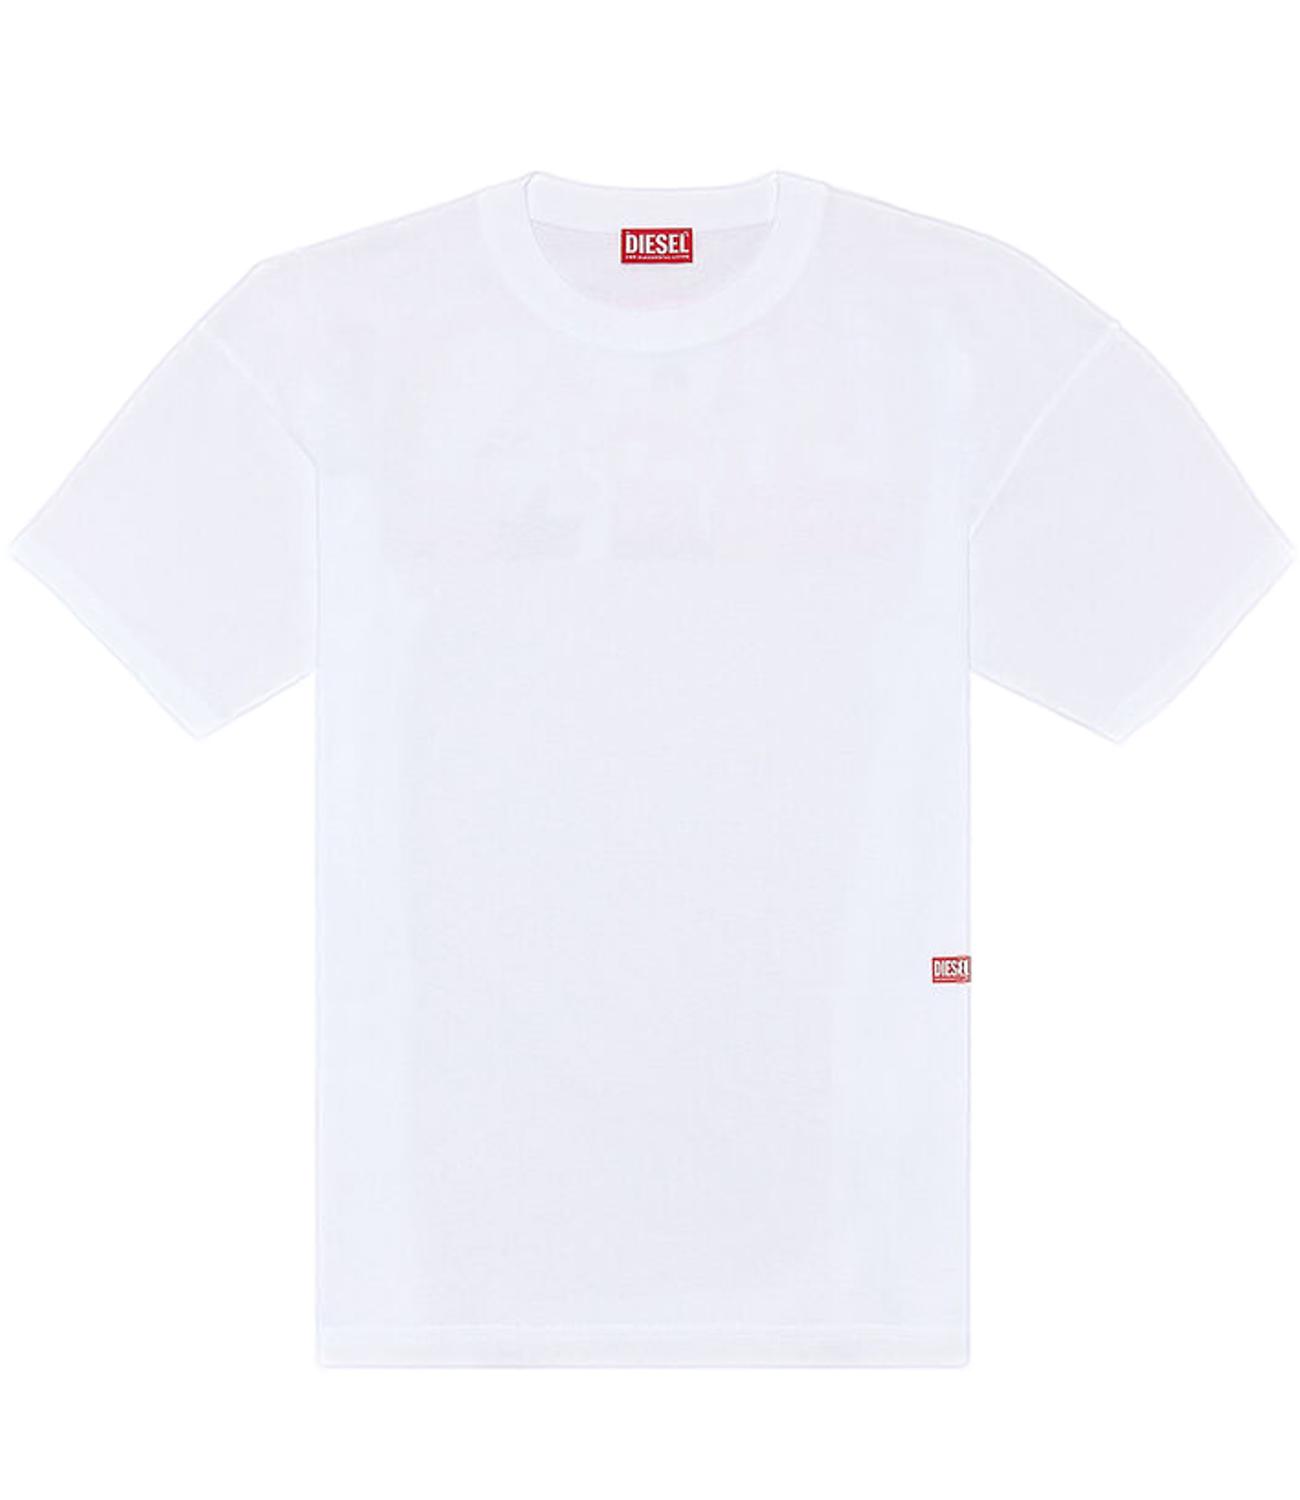 T-shirt Diesel bianca con logo